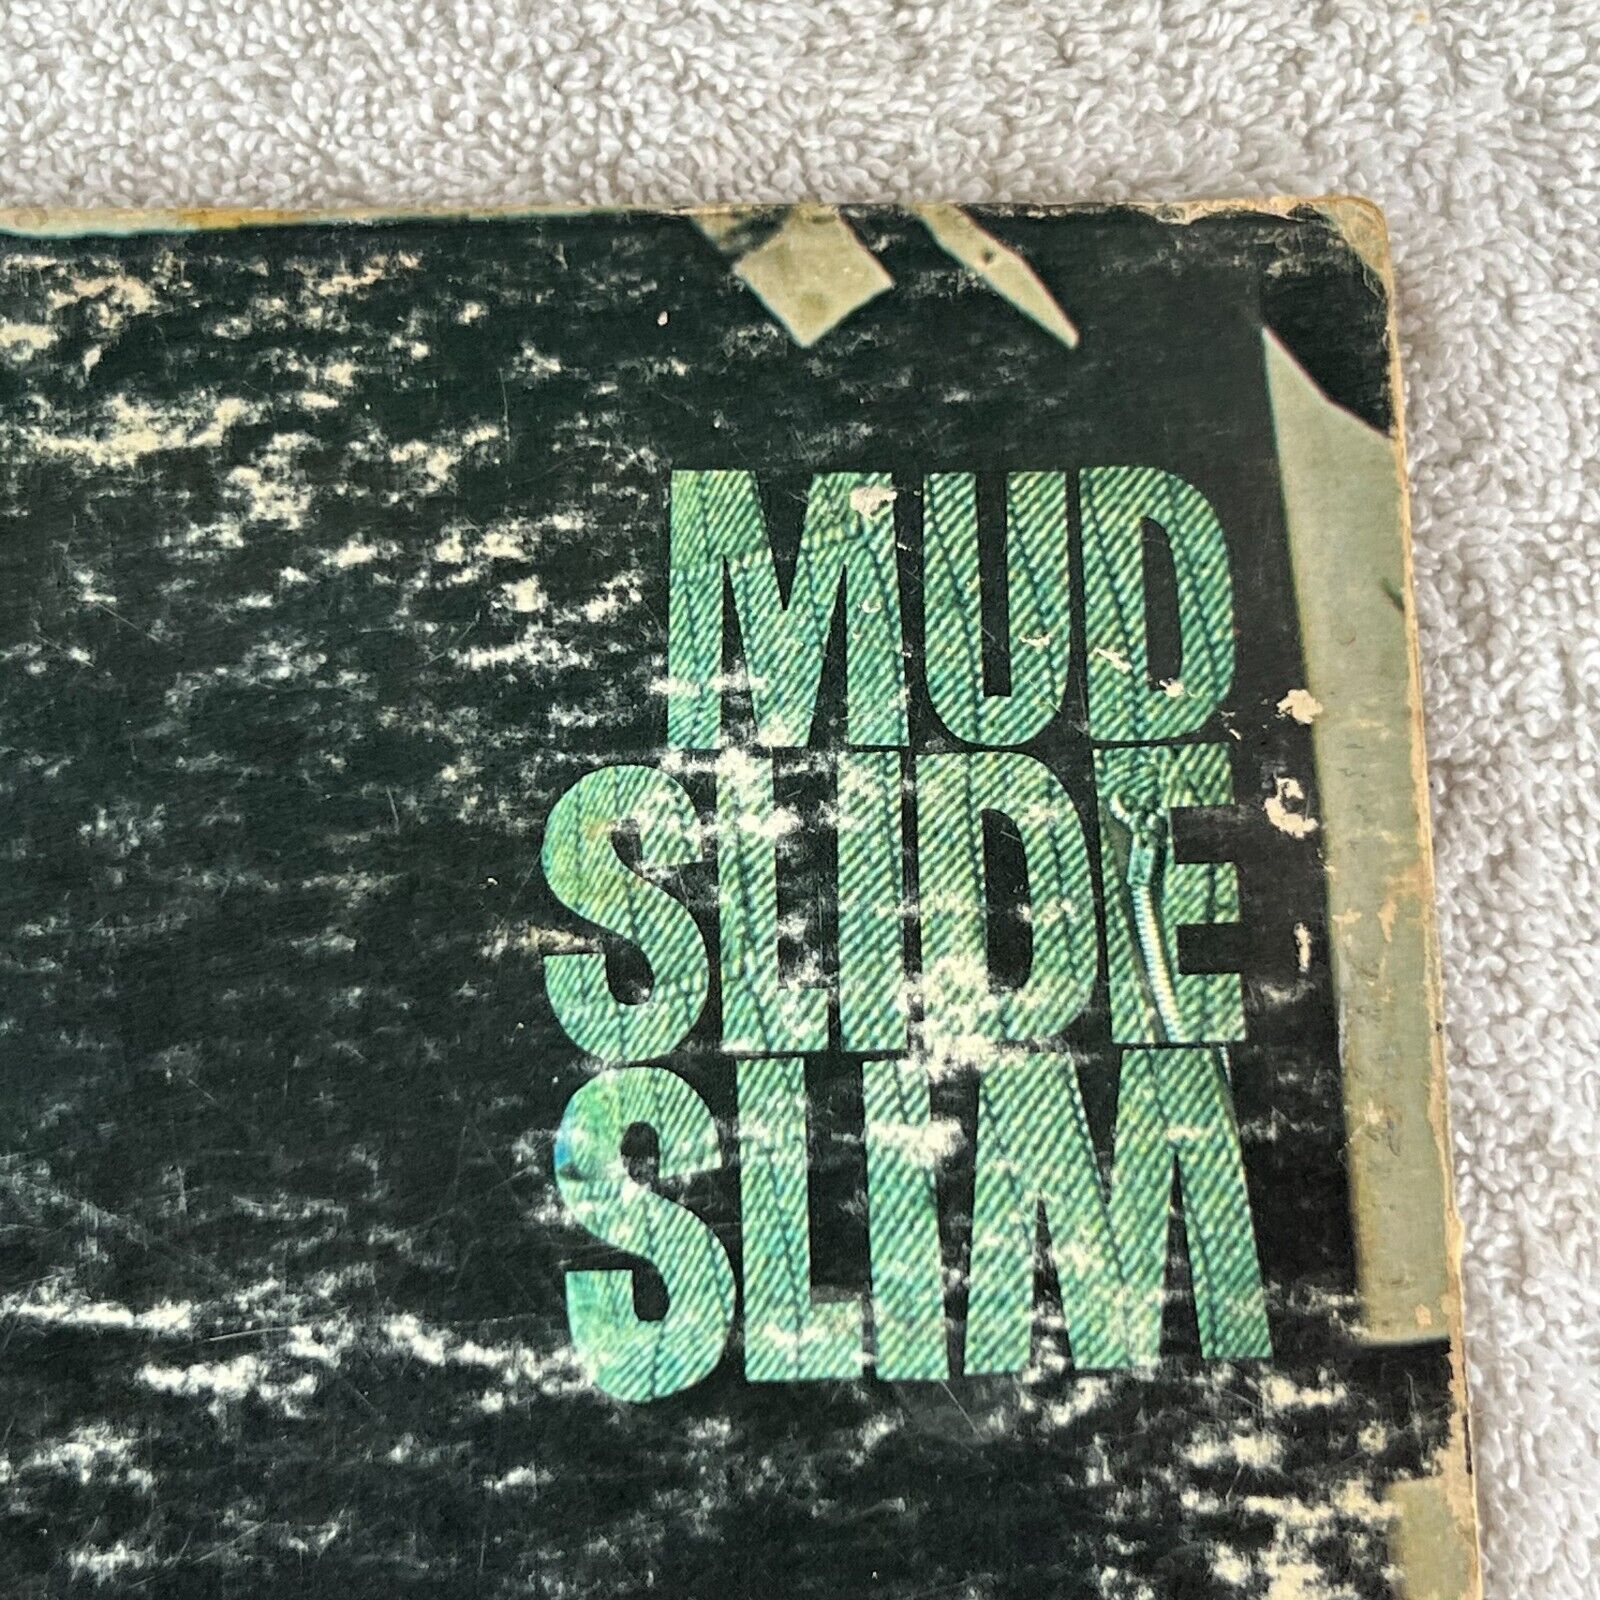 James Taylor Mud Slide Slim 1971 BS-2561 1ST Press Vinyl LP